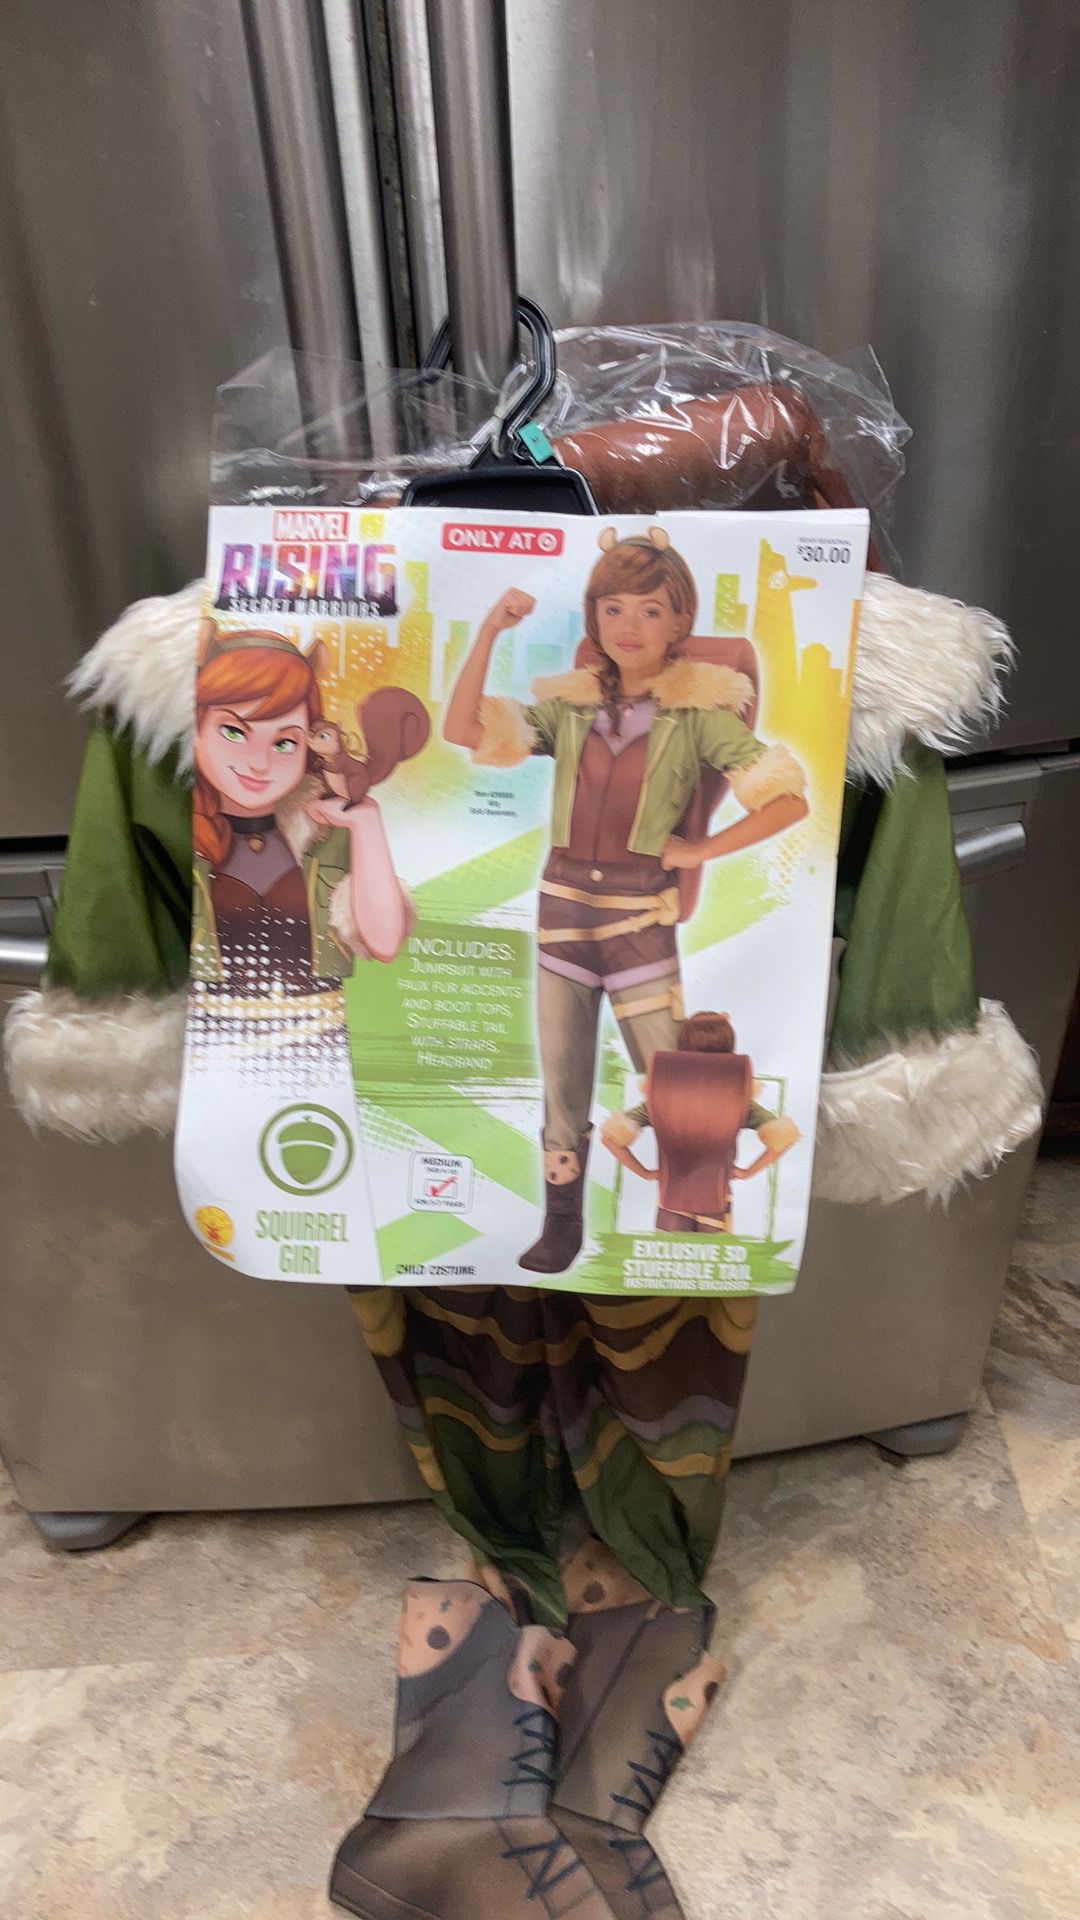 New squirrel girl costume $10